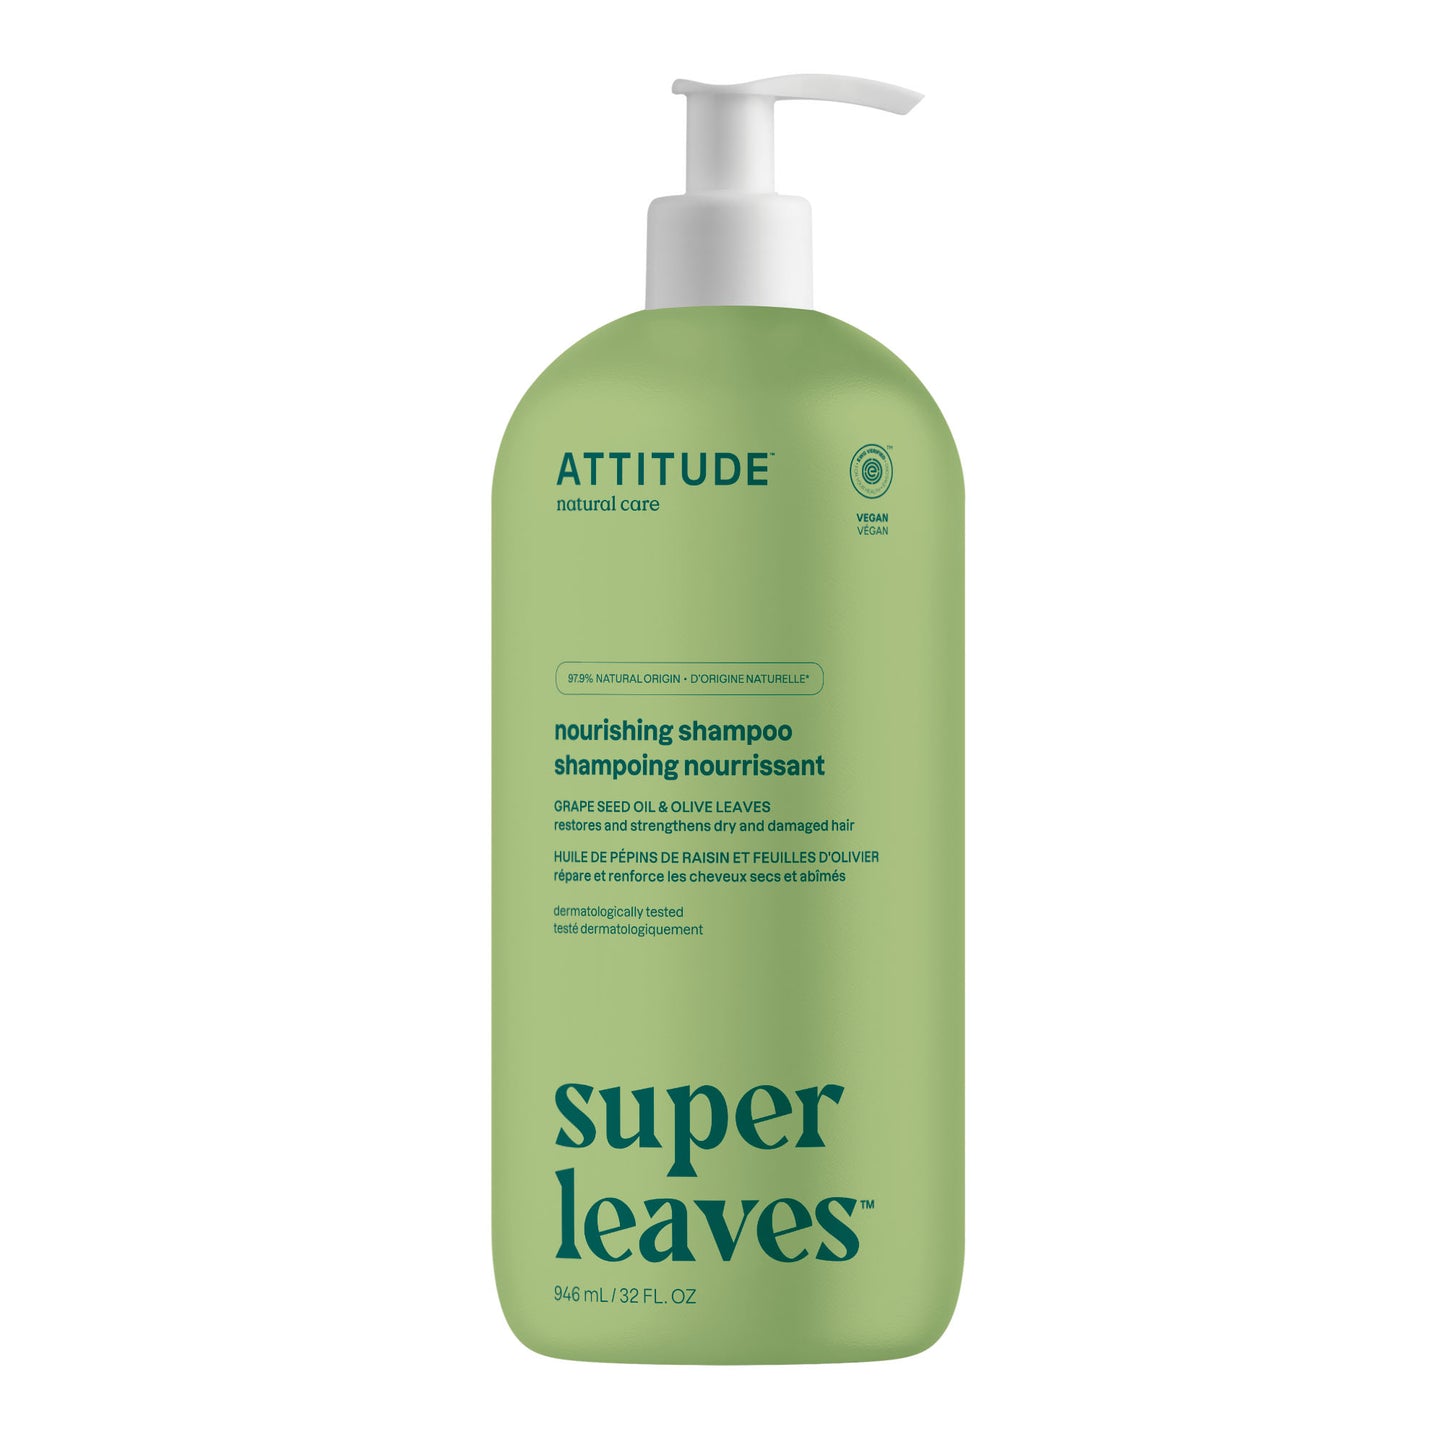 ATTITUDE Super leaves™ Shampoo Nourishing & Strengthening Restores and strengthens dry and damaged hair 11503_en?_main? 32 FL. OZ.